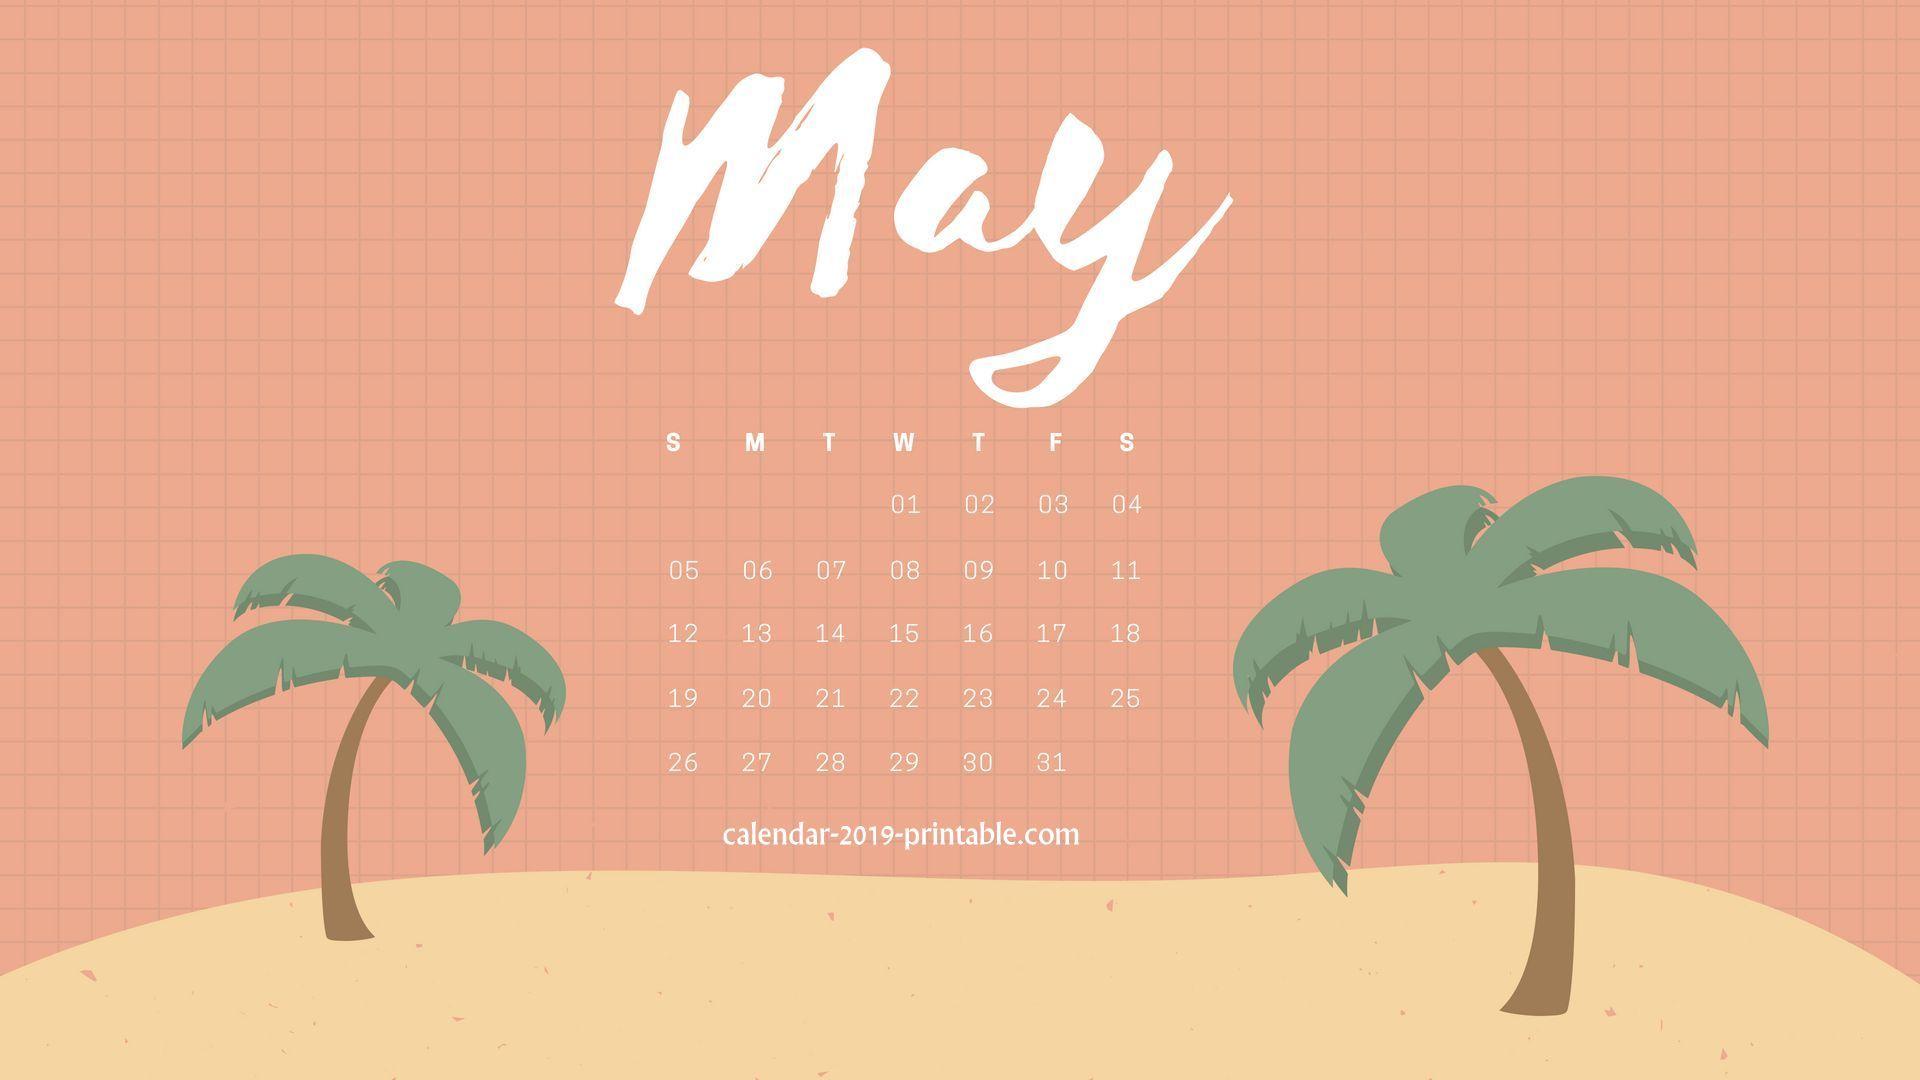 may 2019 calendar wallpaper. Calendar 2019 Wallpaper in 2019